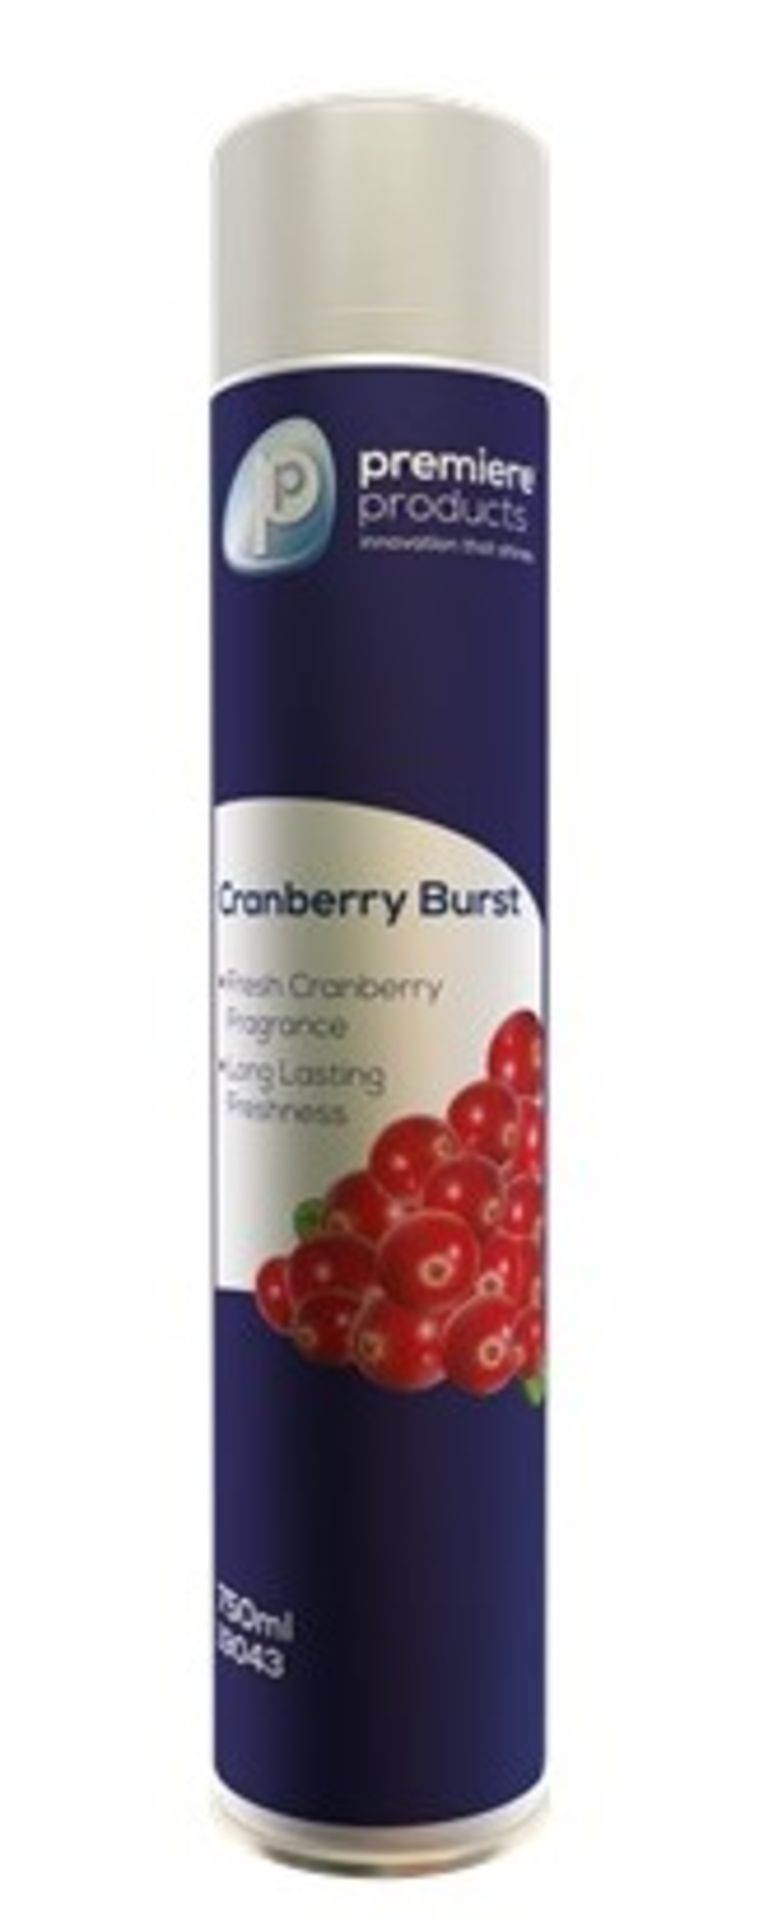 108 x Premiere 750ml Cranberry Burst Air Freshener - Premiere Products - Includes 108 x 750ml Bottle